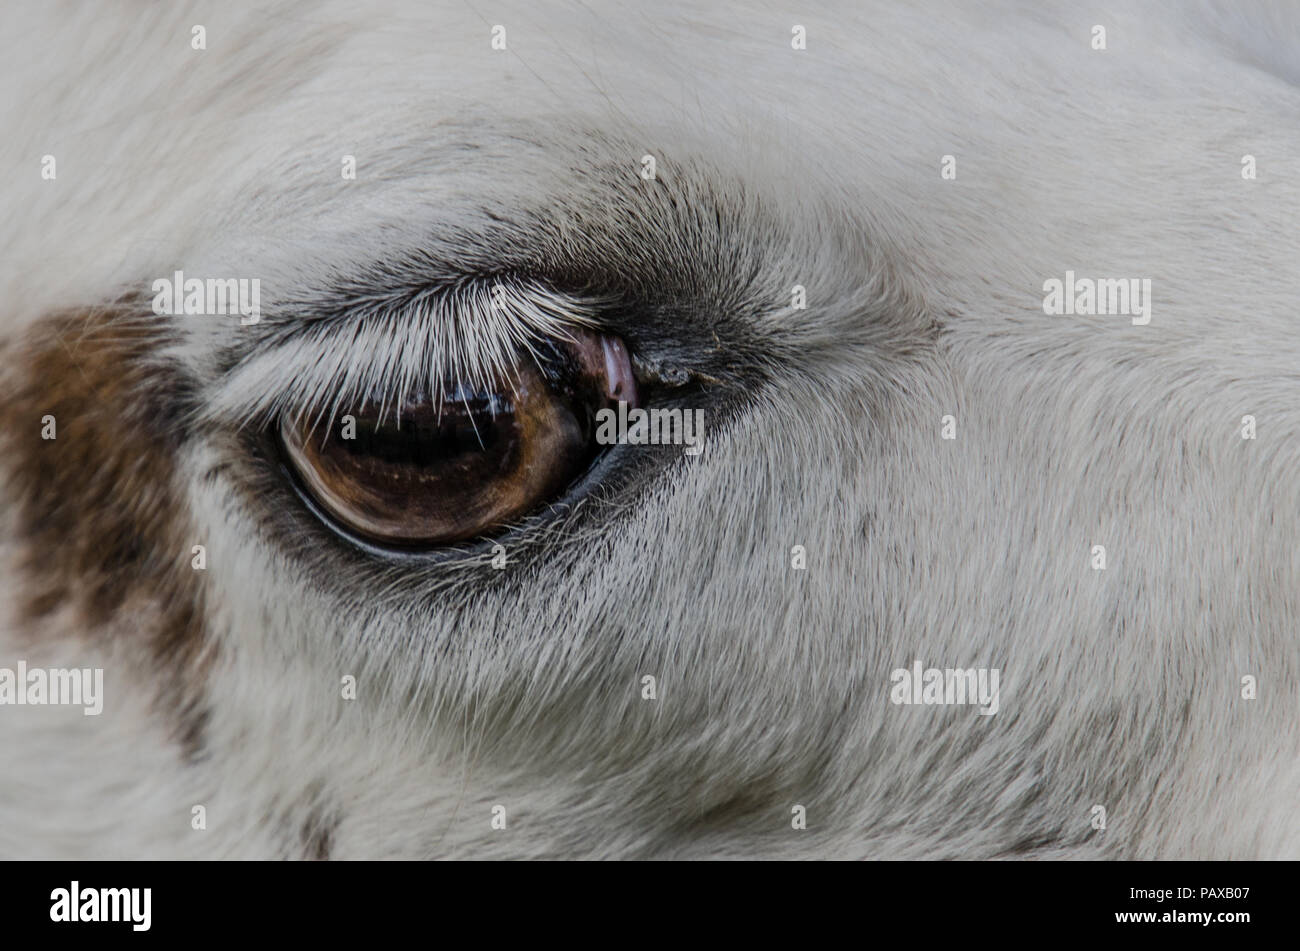 Beautiful close up of long lashes of llama's eye. Stock Photo